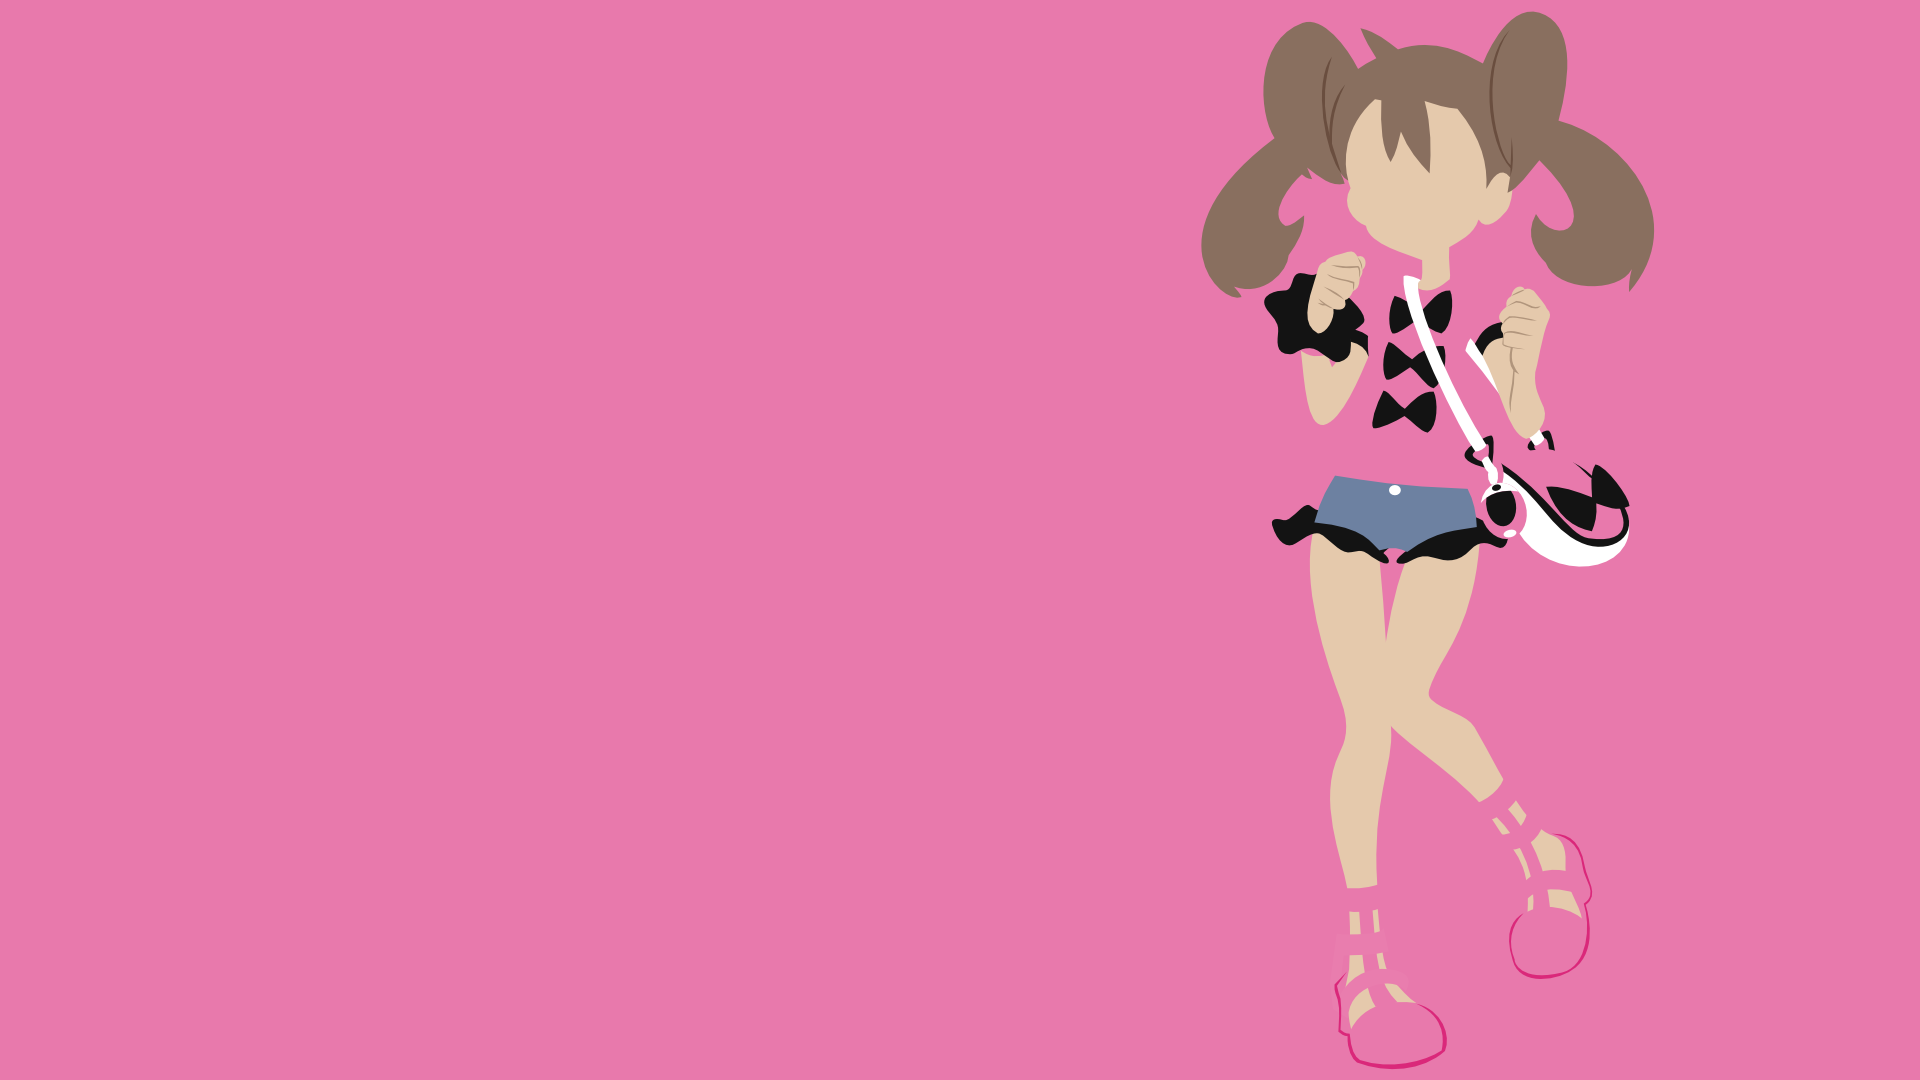 Anime 1920x1080 minimalism Pokémon anime girls pink background simple background knees together anime